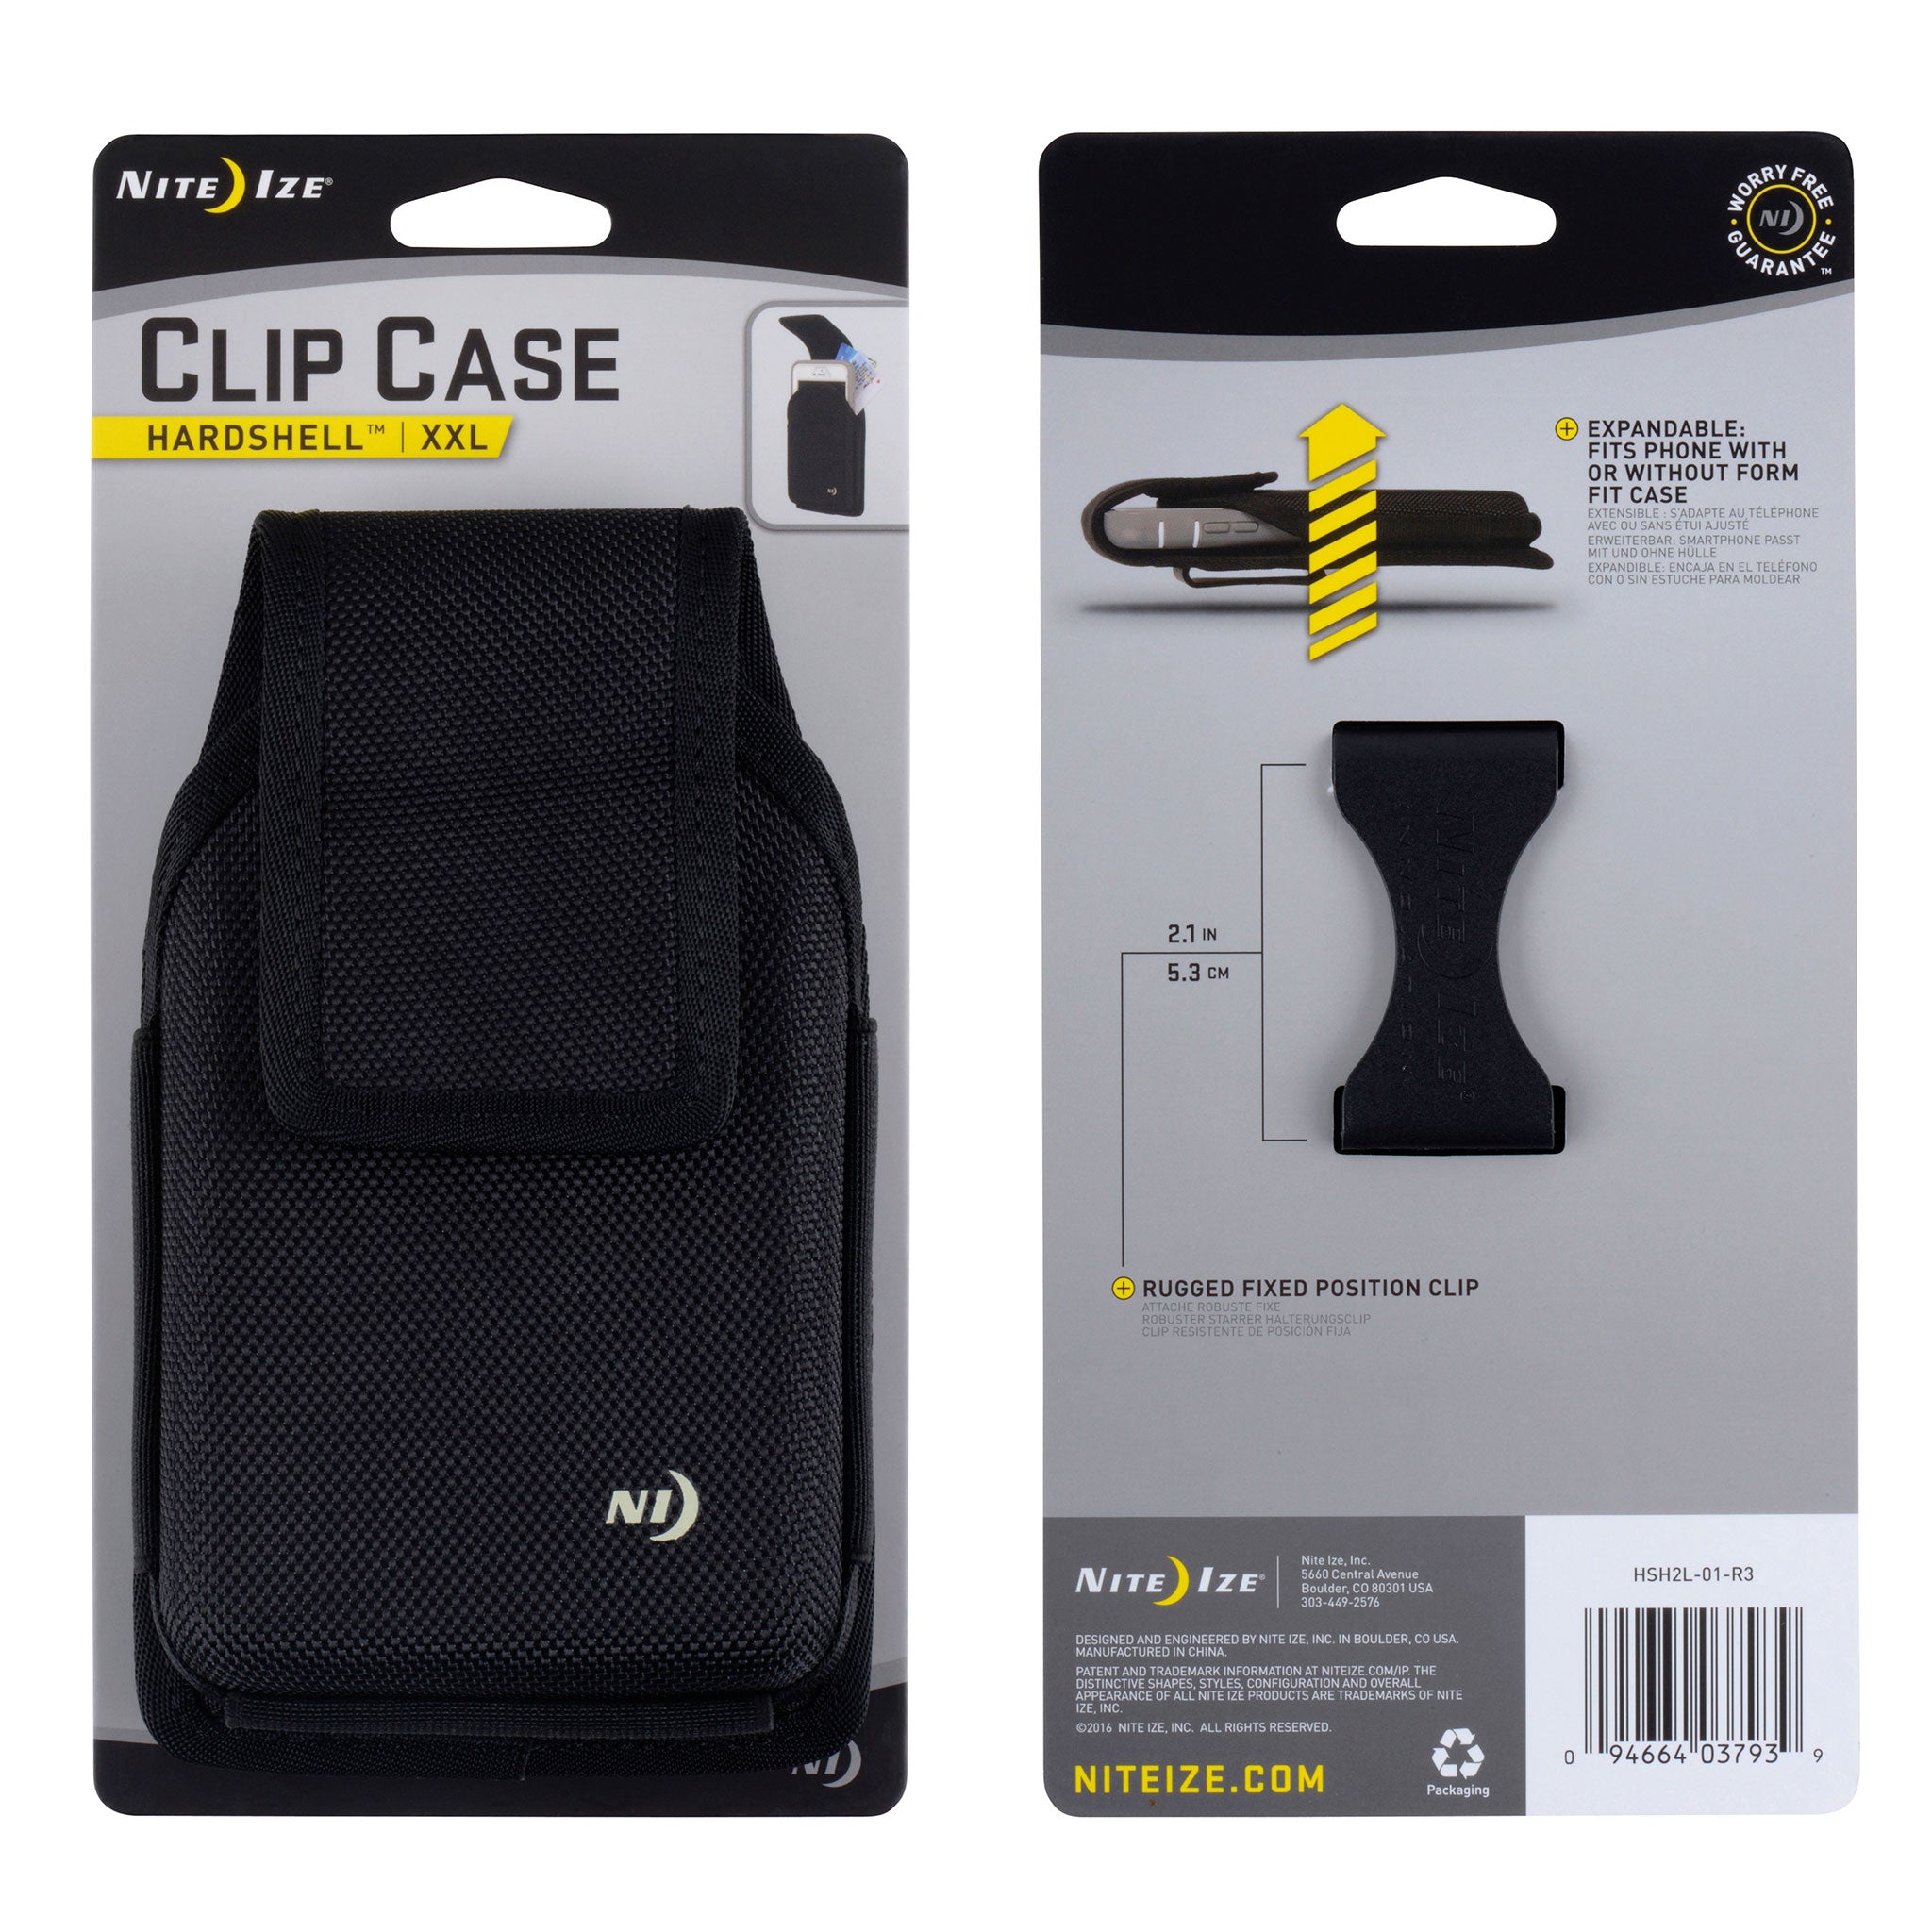 Nite Ize - Clip Case Hardshell Xxl Vertical Pouch - Black